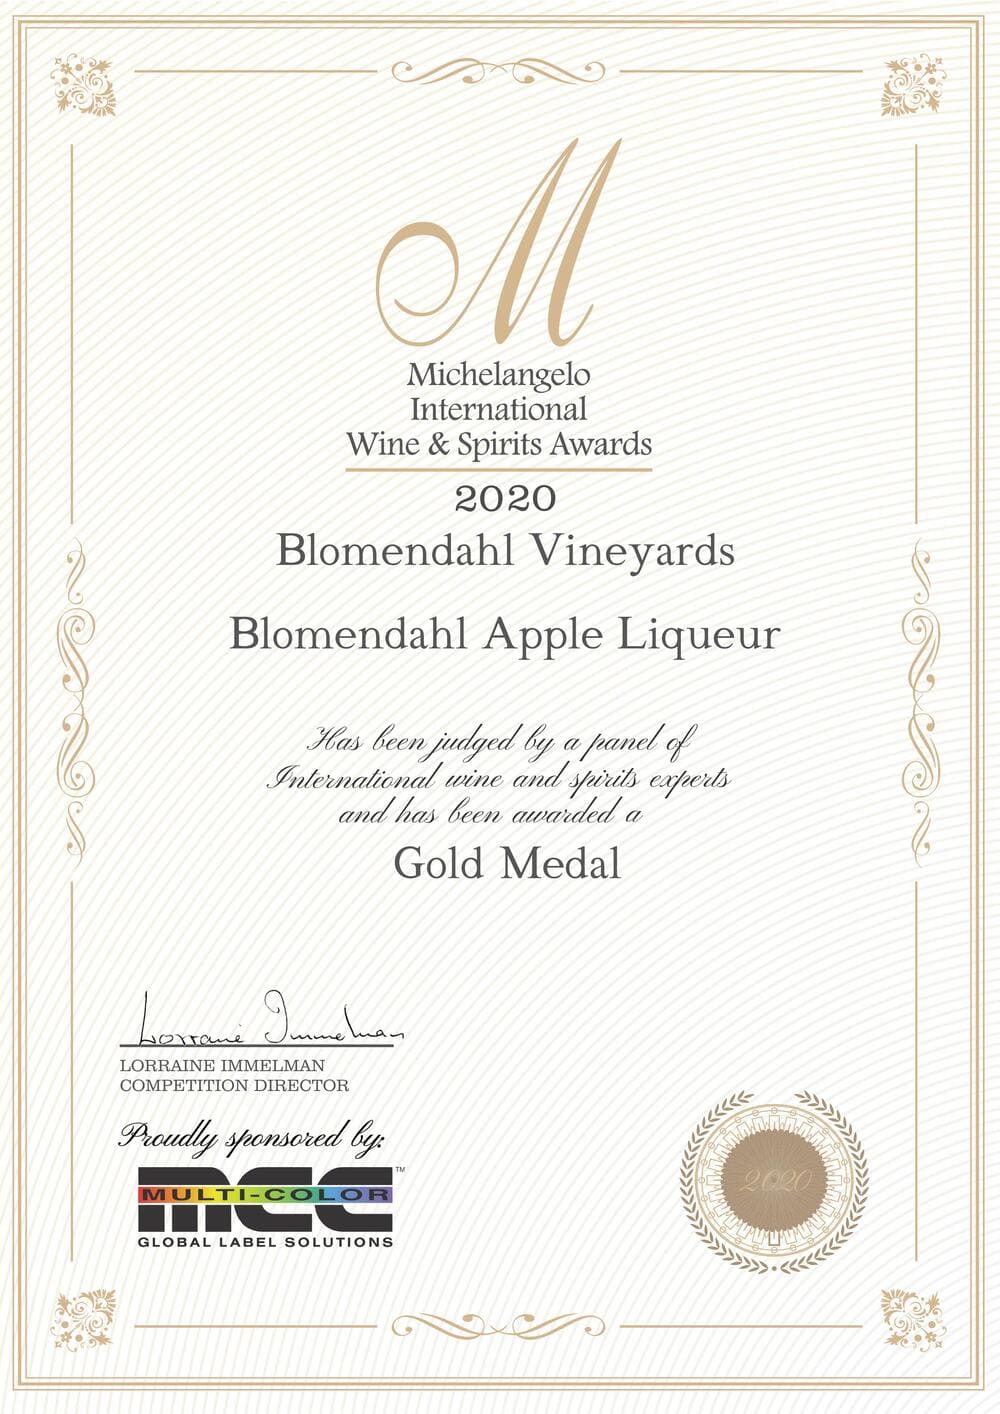 Gold Award Certificate